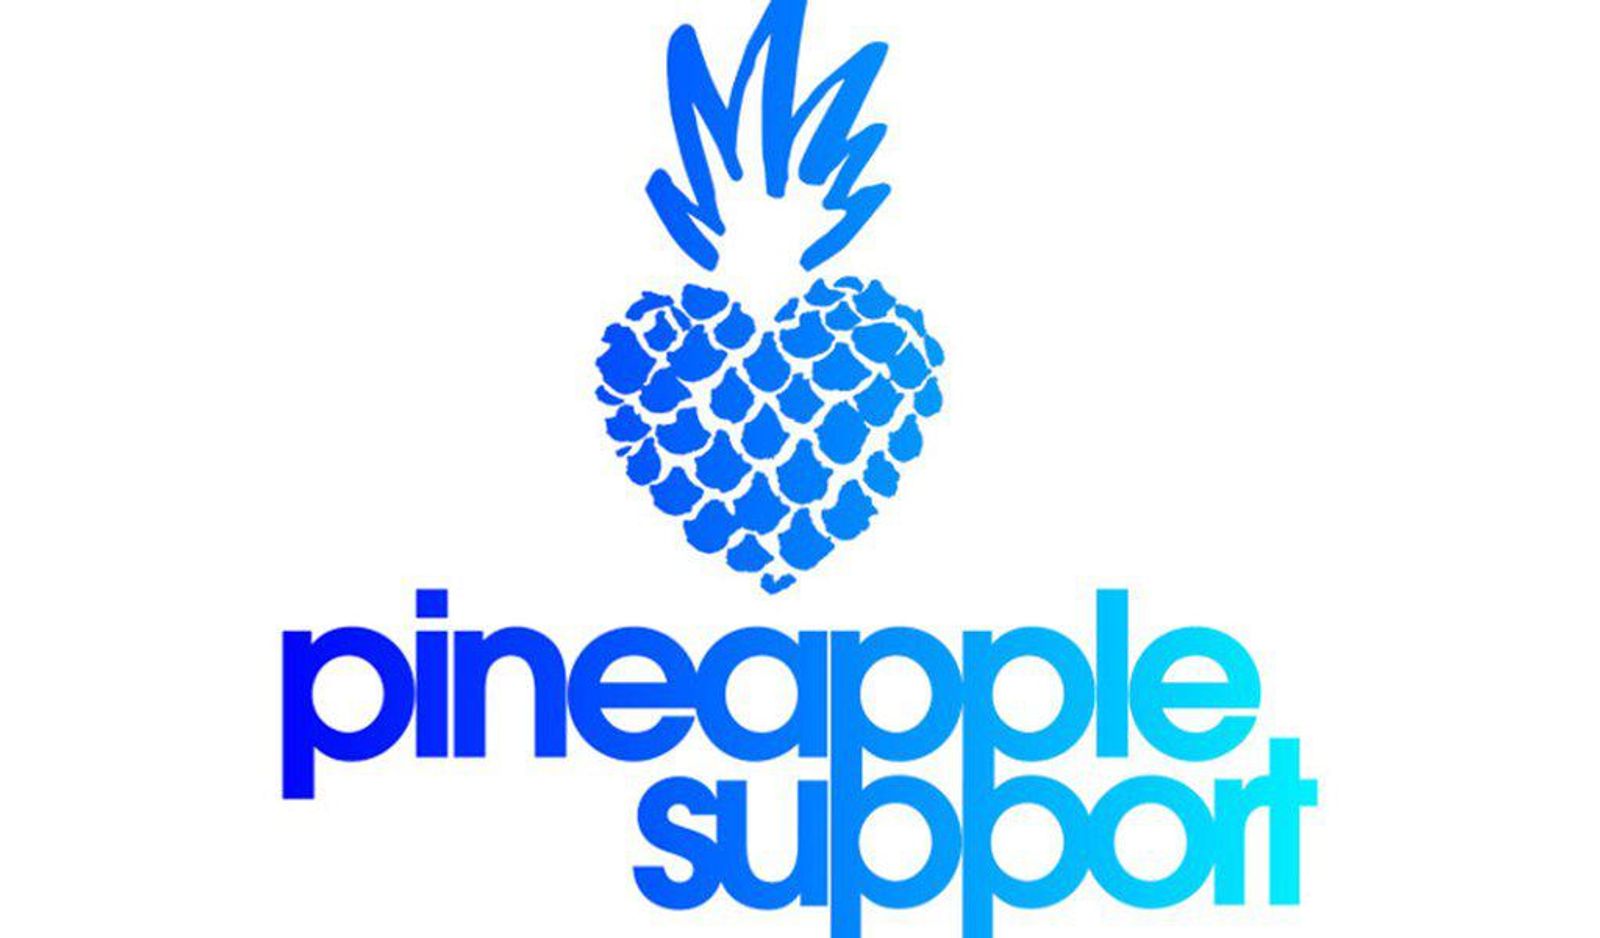 Erika Lust Films Joins as Sponsor of Pineapple Support